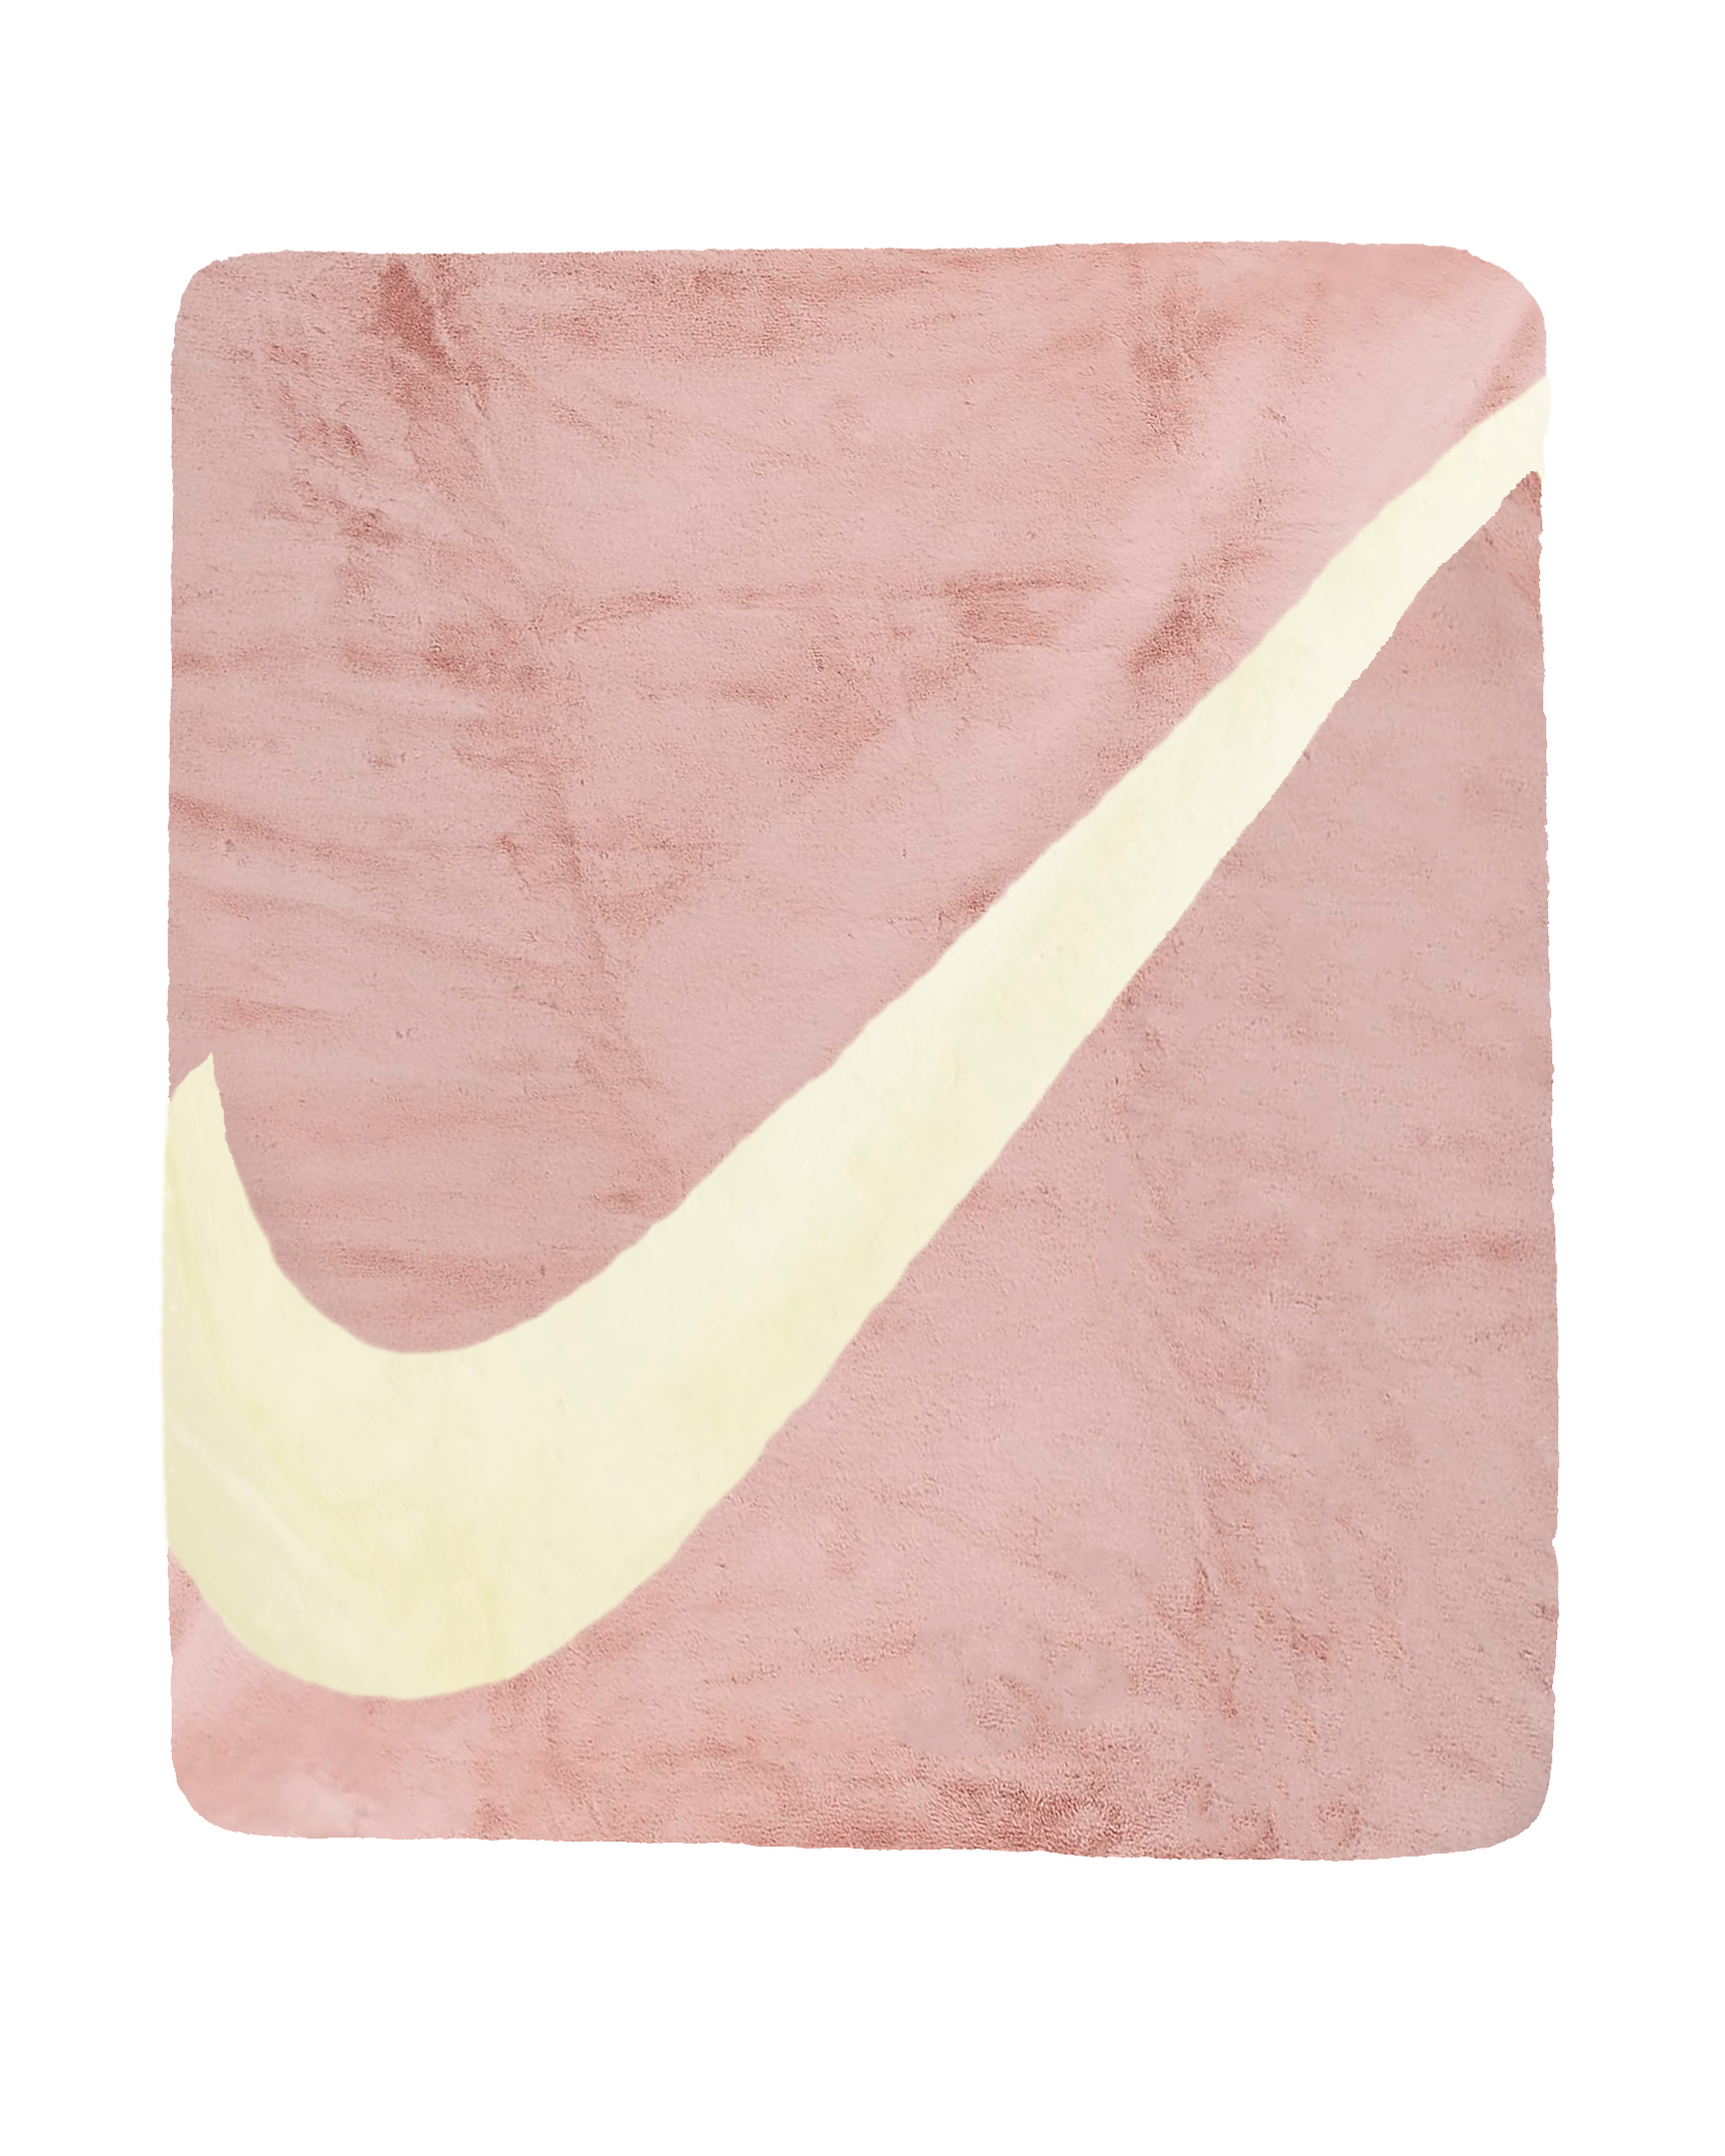 Nike Swoosh Faux Fur Blanket Pink Oxford/Cashmere/Cashmere - US